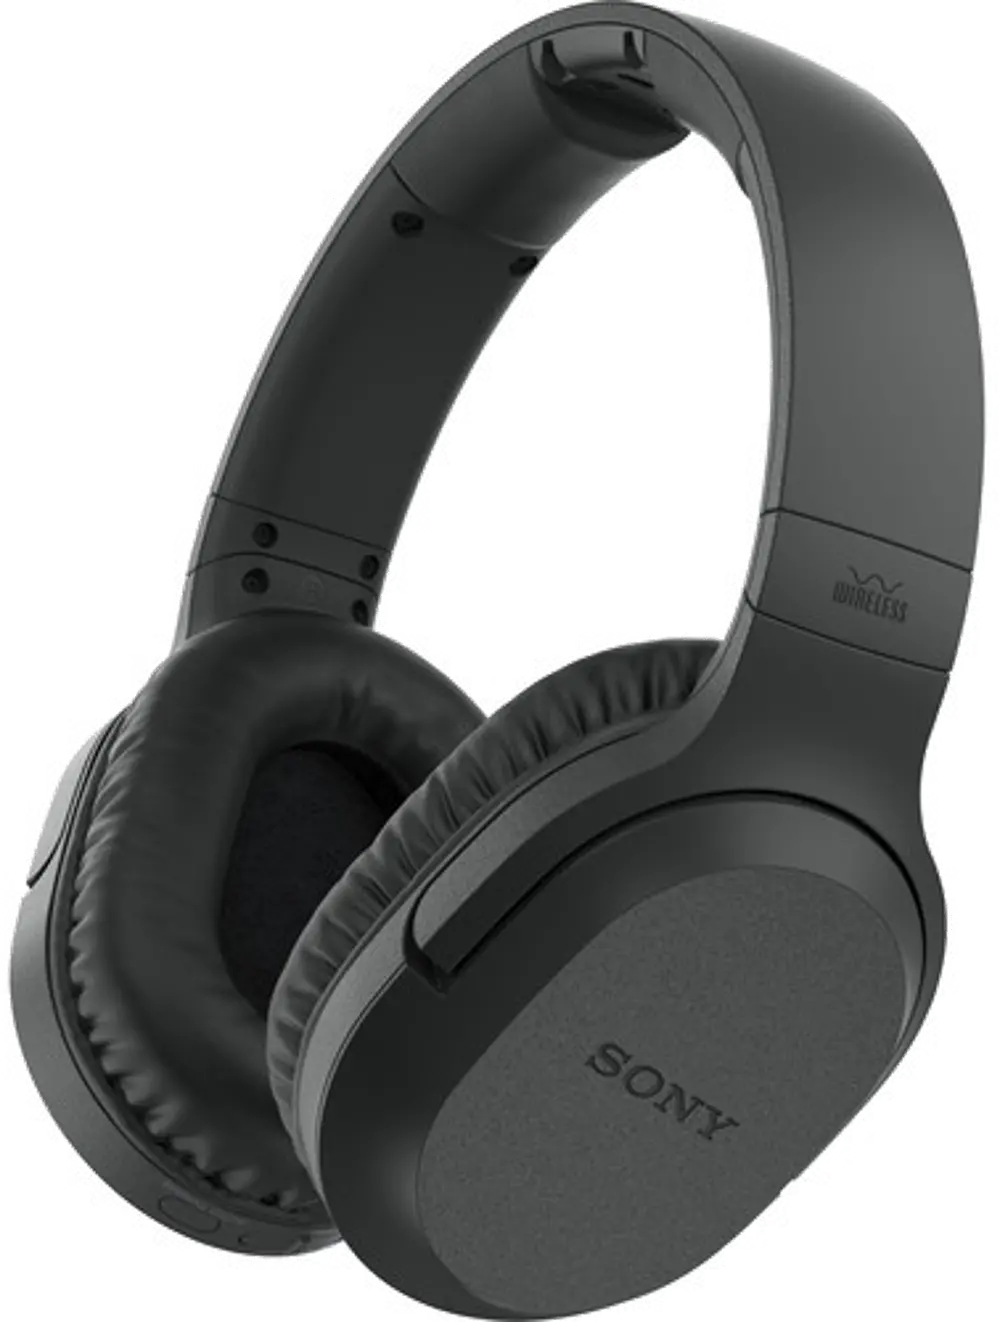 WHRF400 Sony Wireless Home Theater Headphones-1